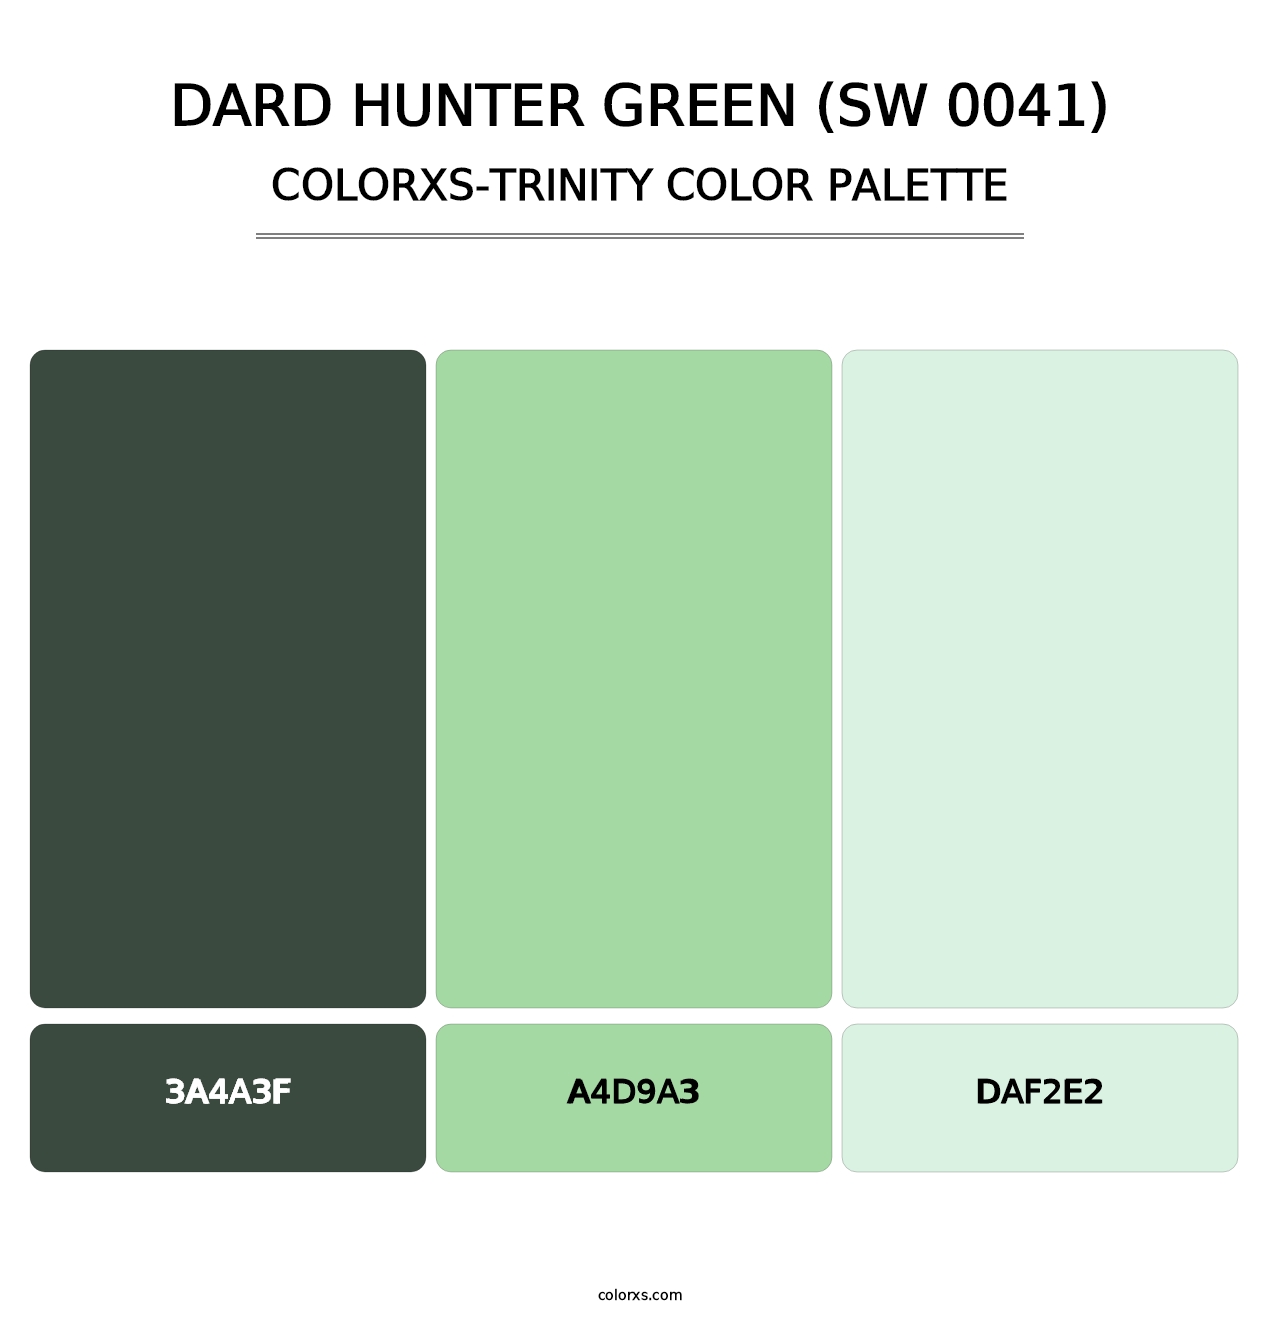 Dard Hunter Green (SW 0041) - Colorxs Trinity Palette